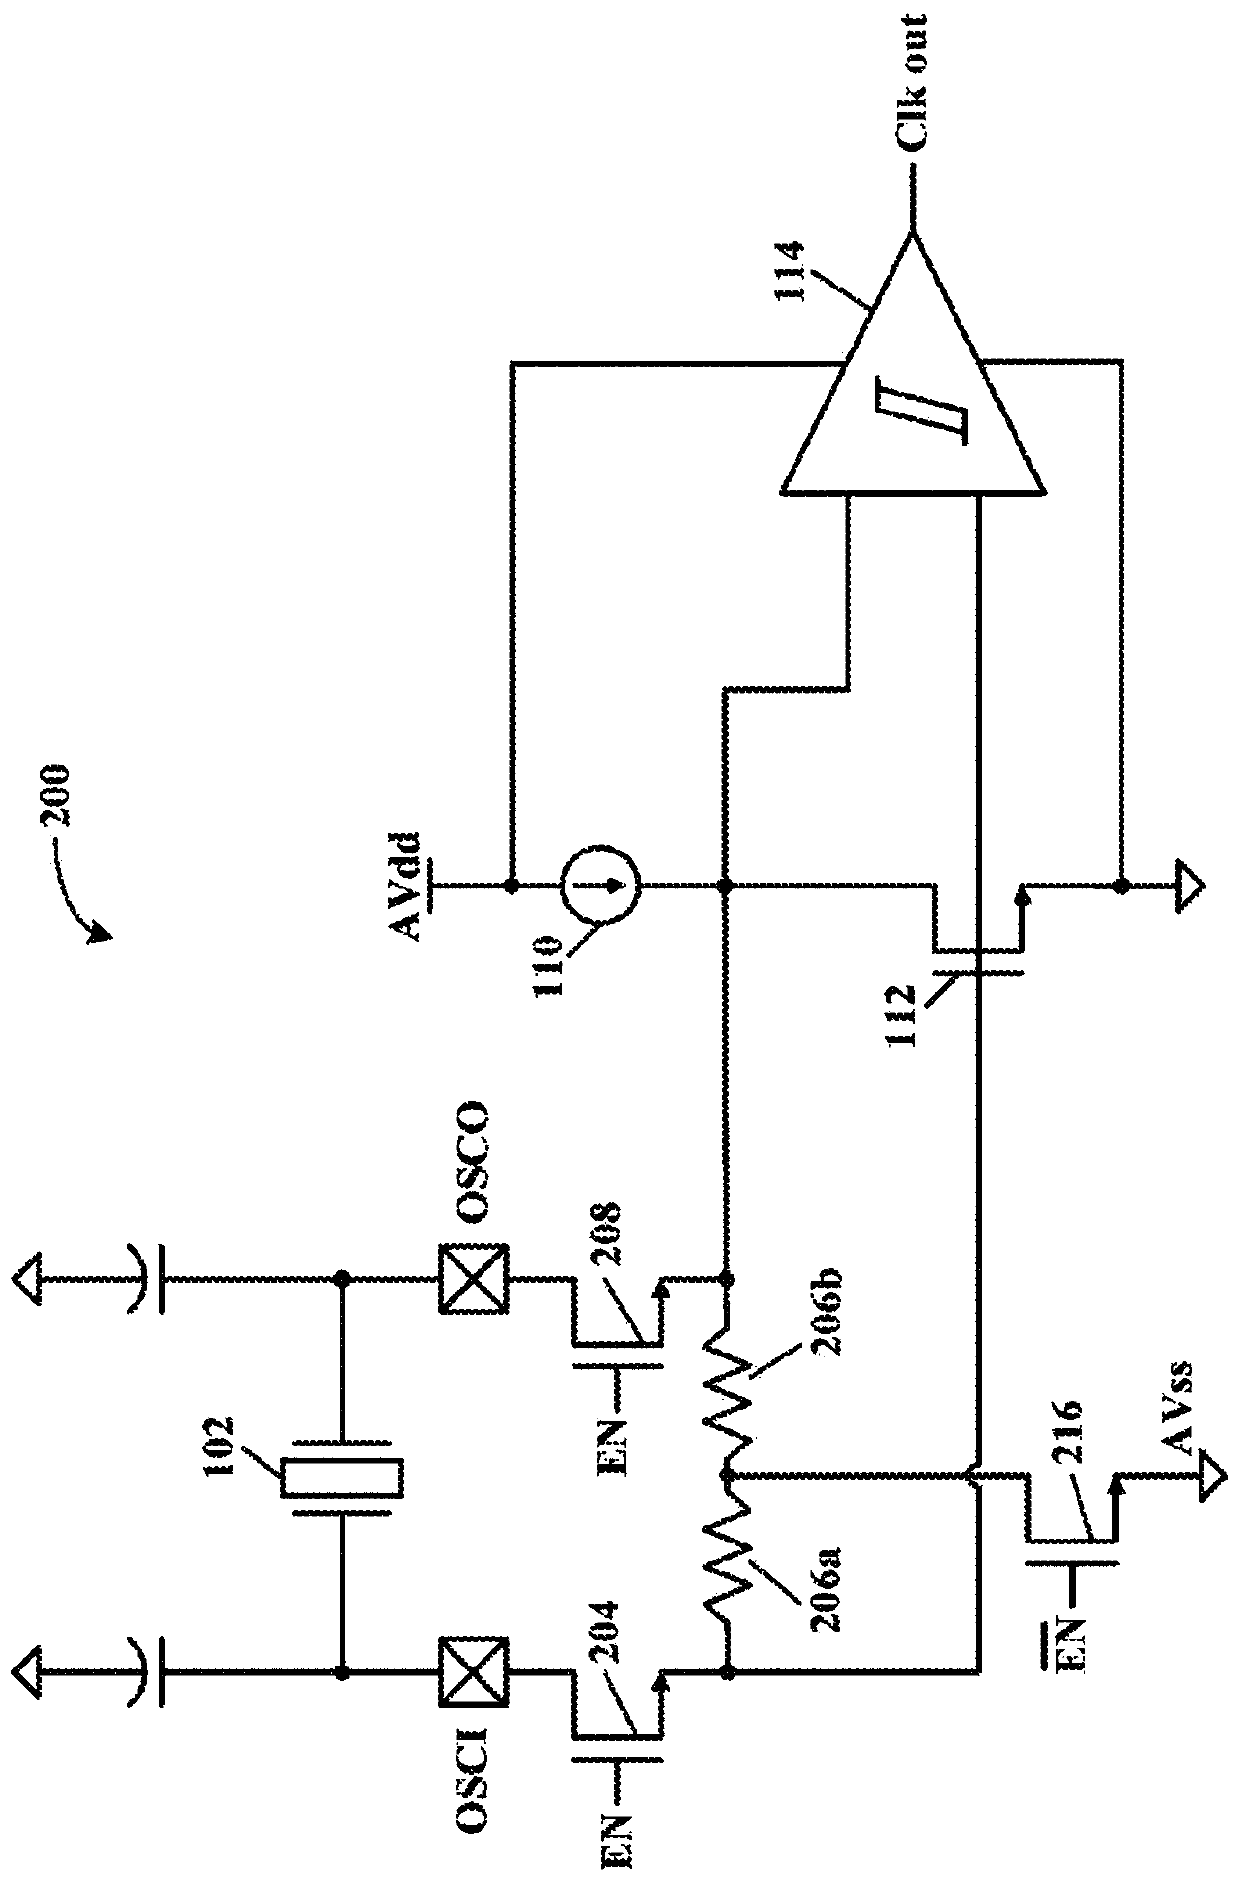 Low-voltage crystal oscillator circuit compatible with GPIO